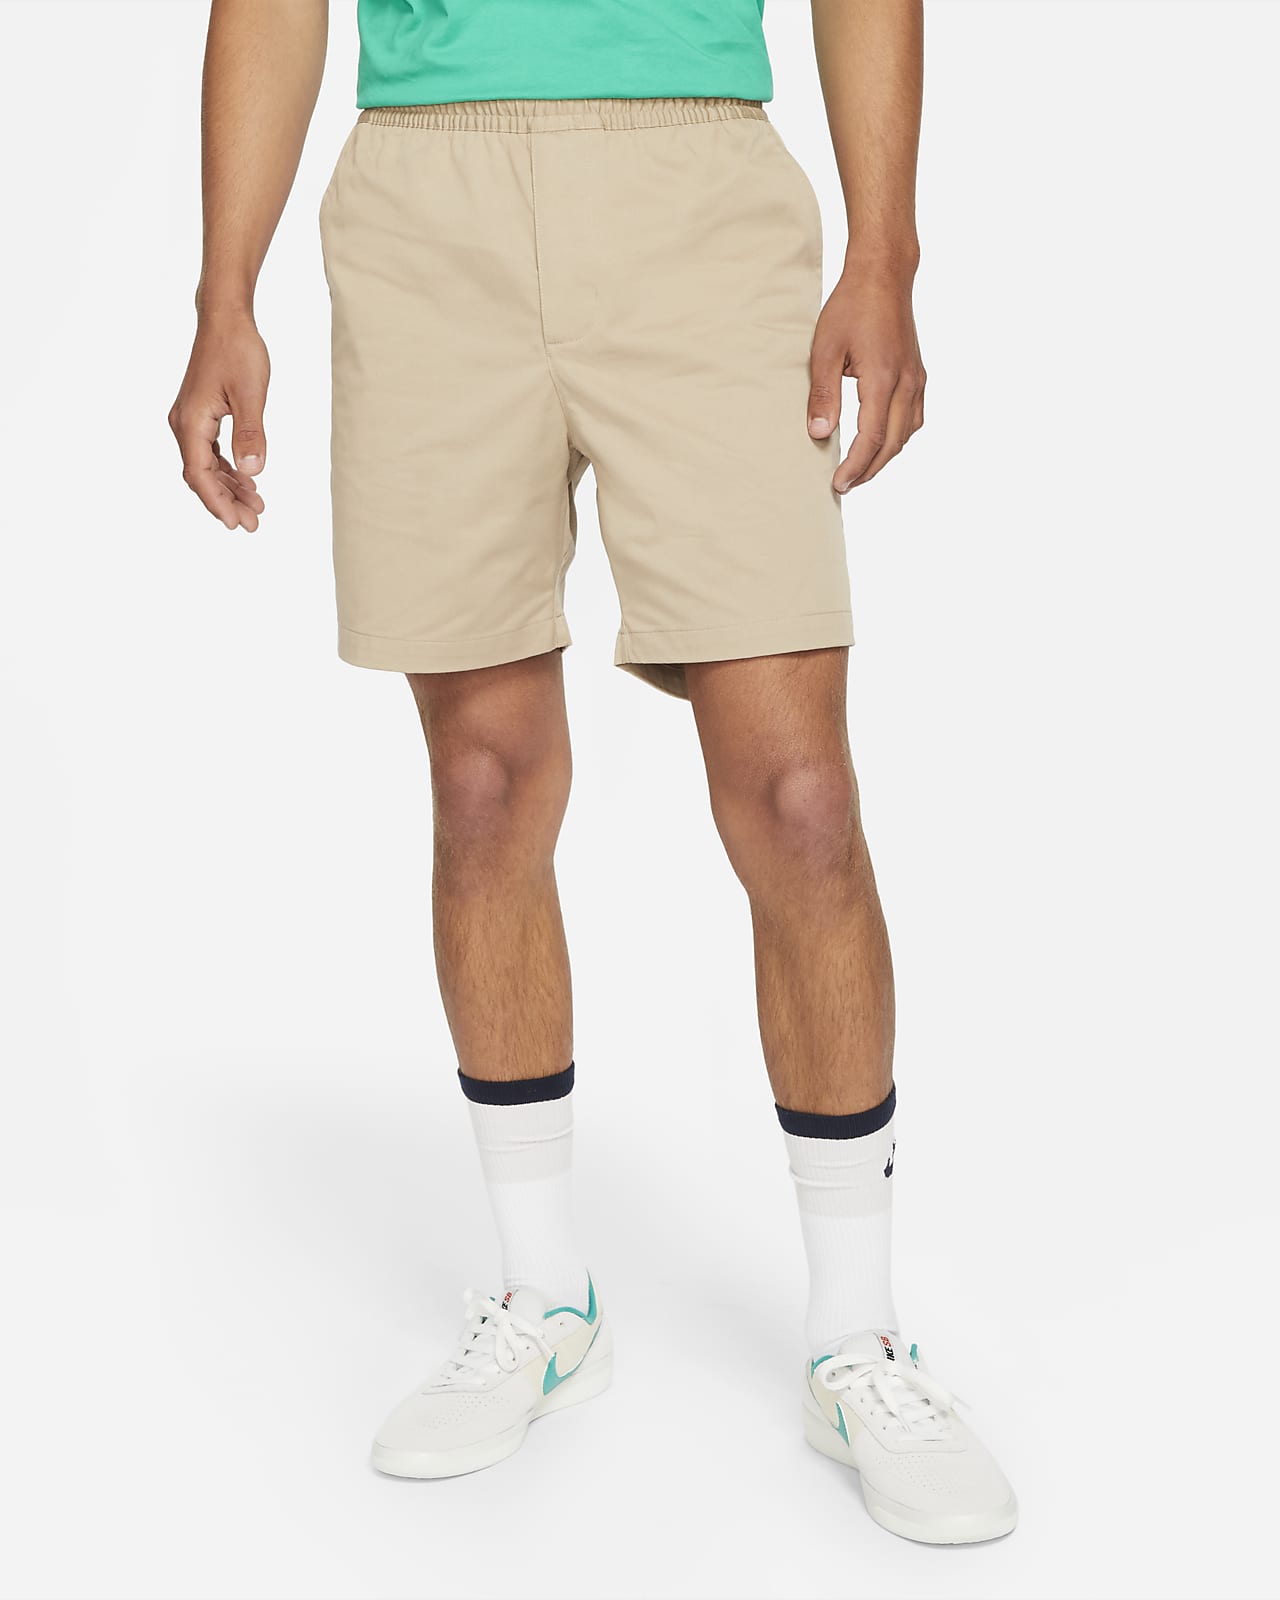 Nike SB Pull-On Skate Chino Shorts